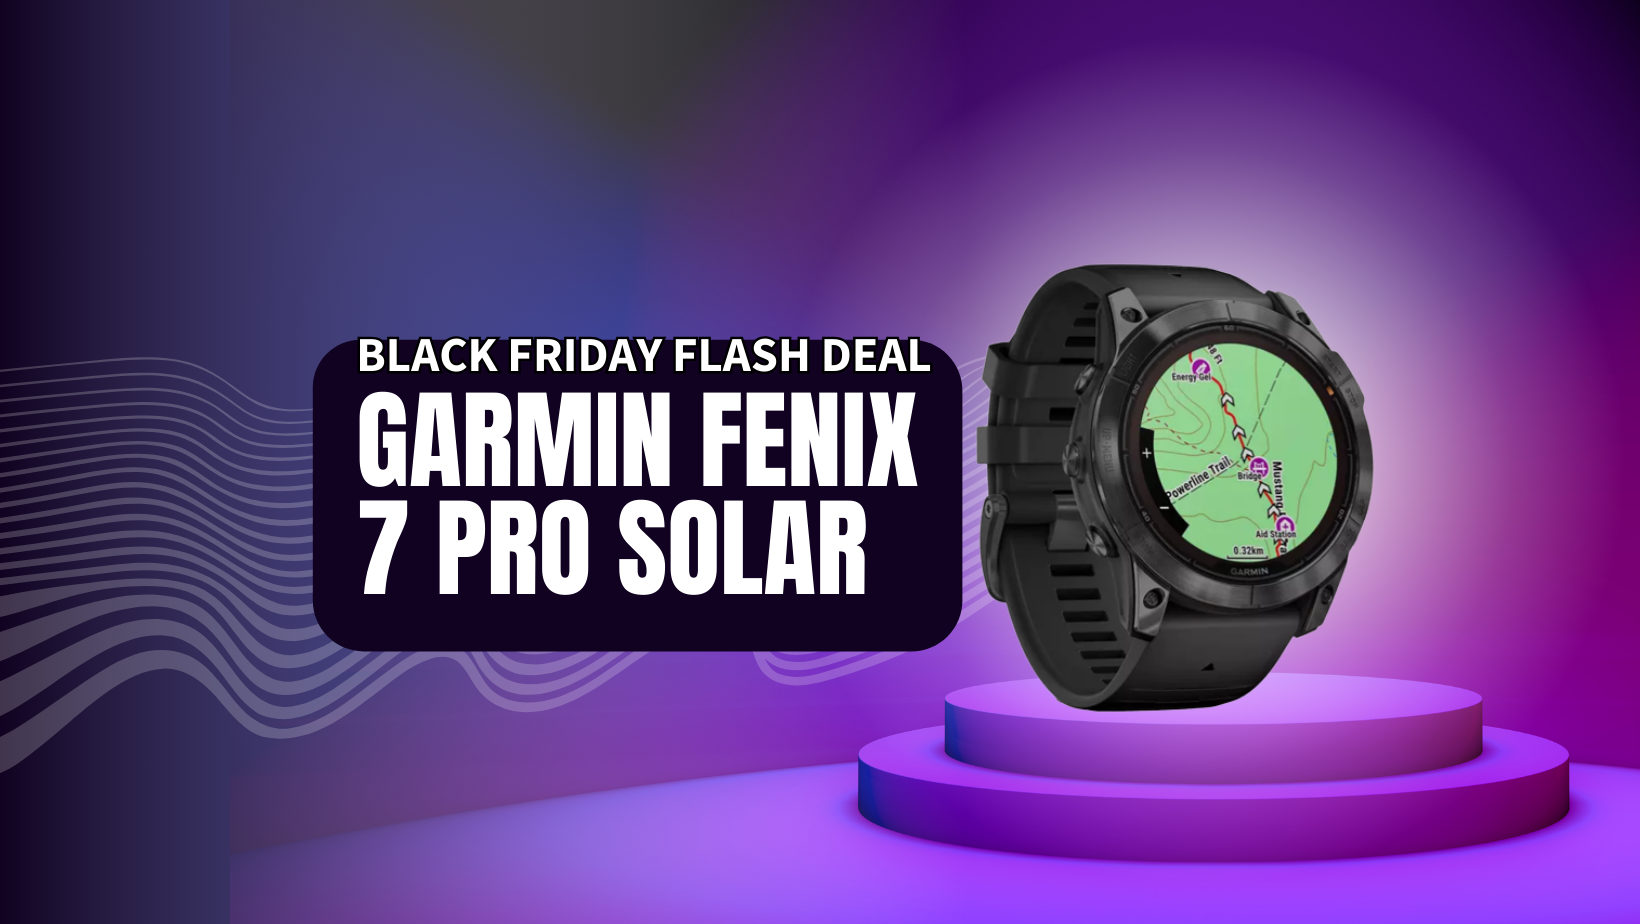 The best Black Friday deals for Garmin.